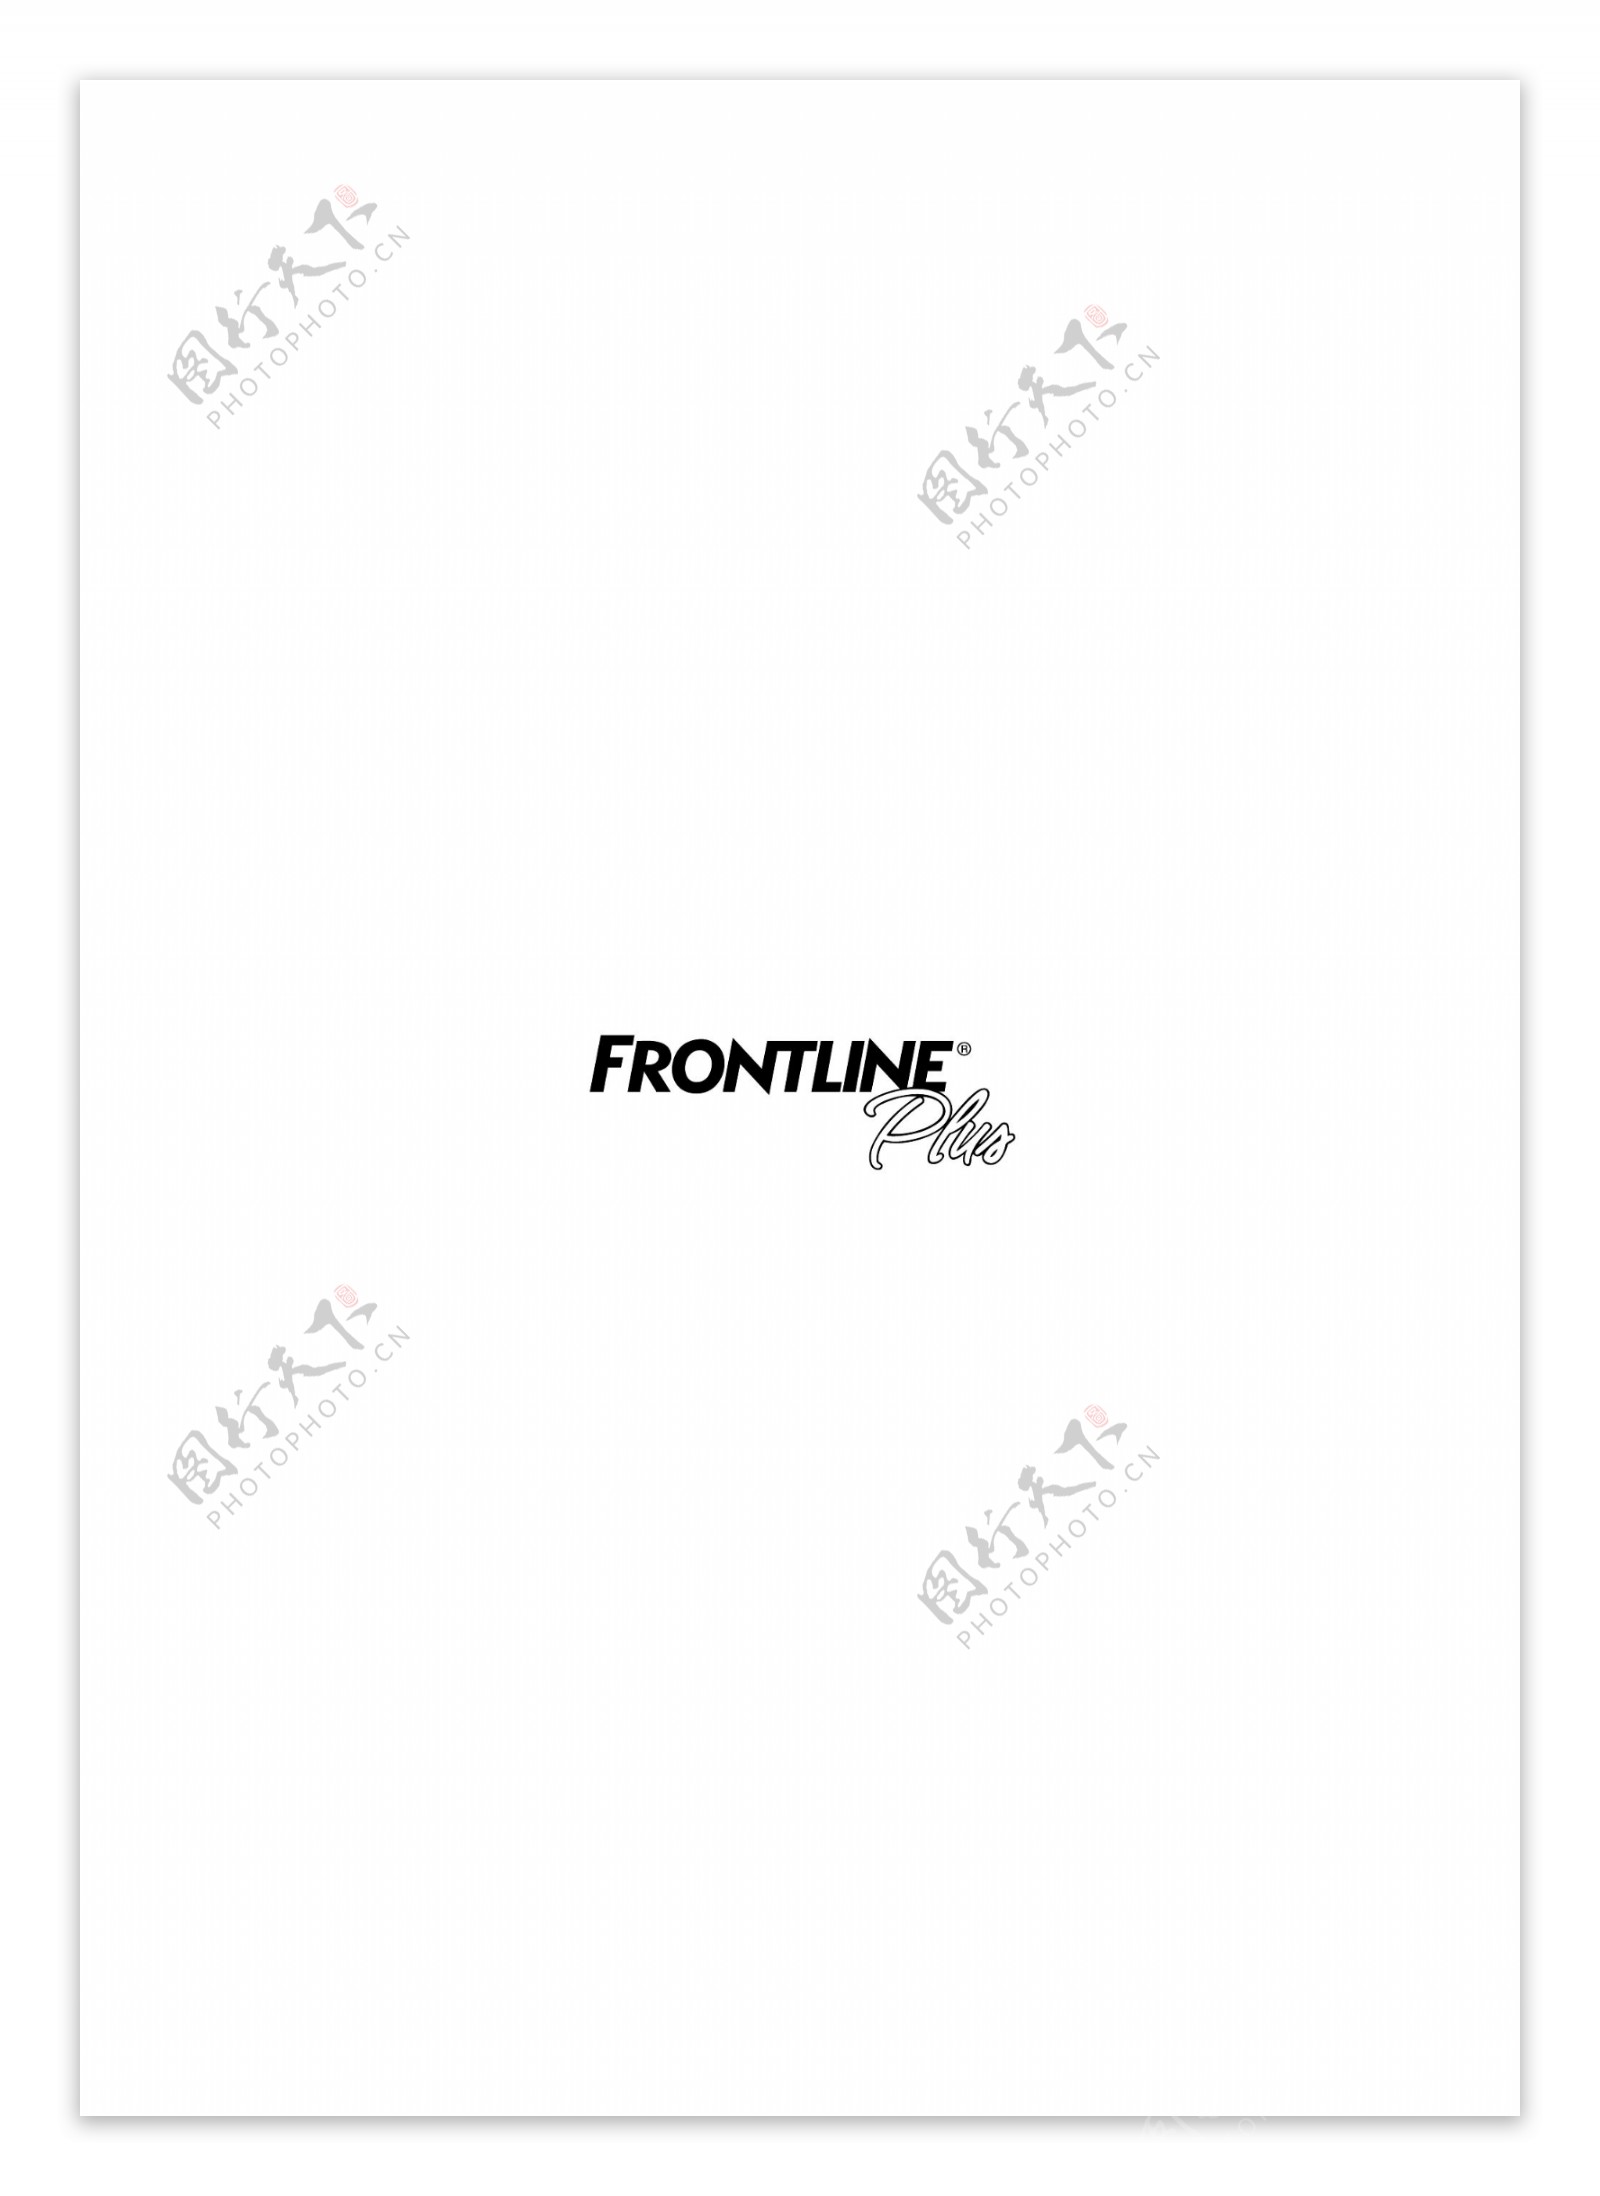 FrontlinePluslogo设计欣赏FrontlinePlus医疗机构LOGO下载标志设计欣赏